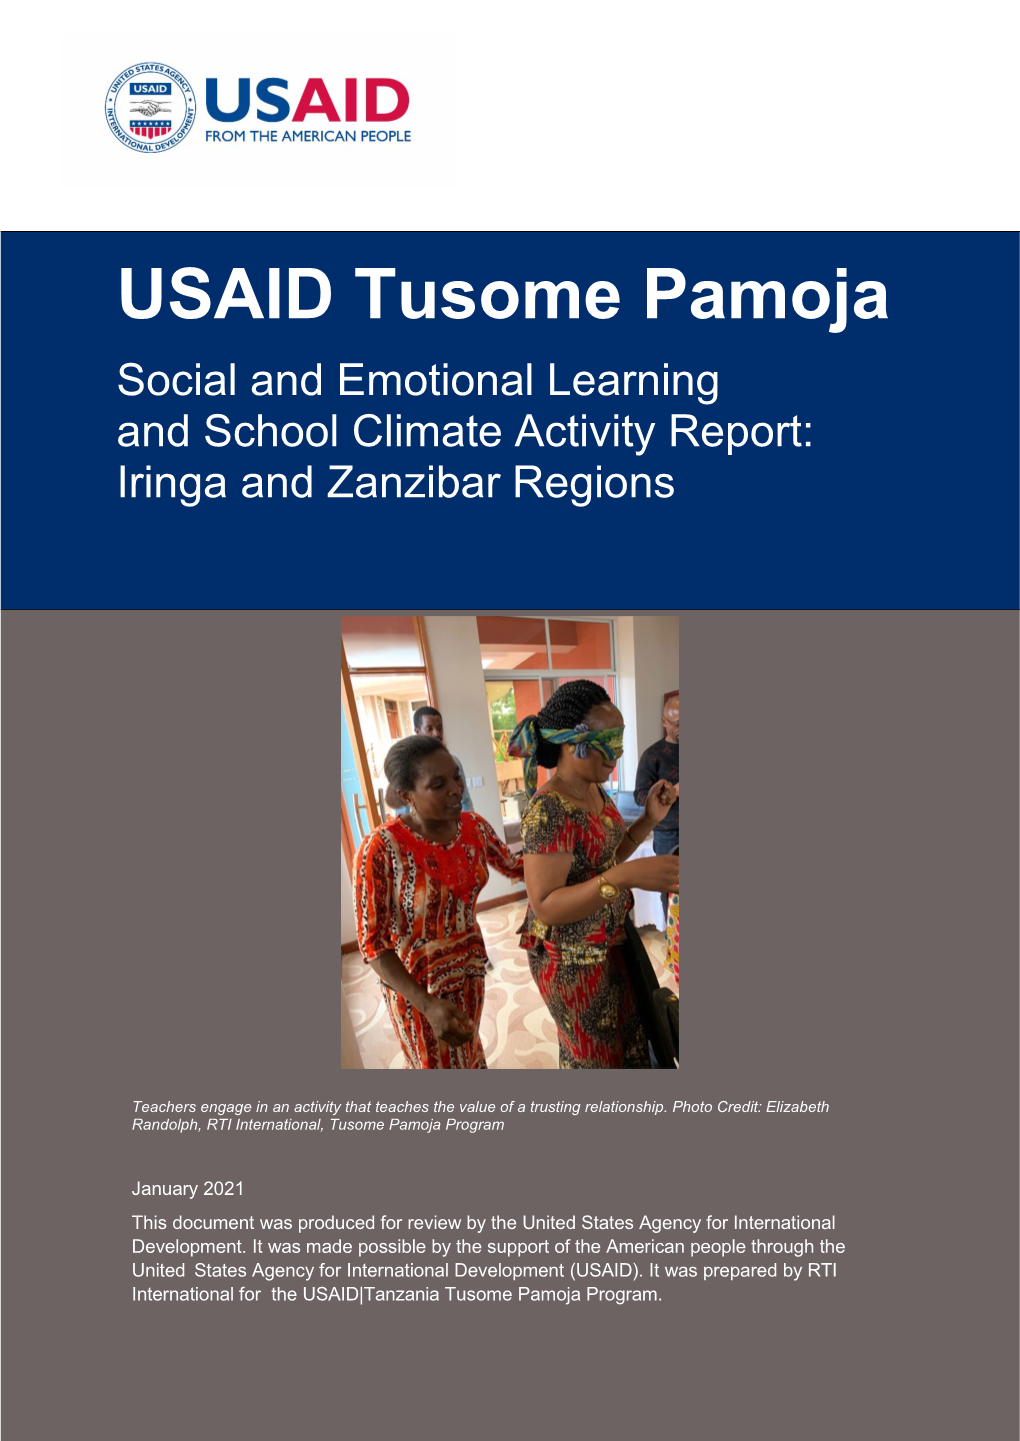 USAID Tusome Pamoja Social and Emotional Learning and School Climate Activity Report: Iringa and Zanzibar Regions